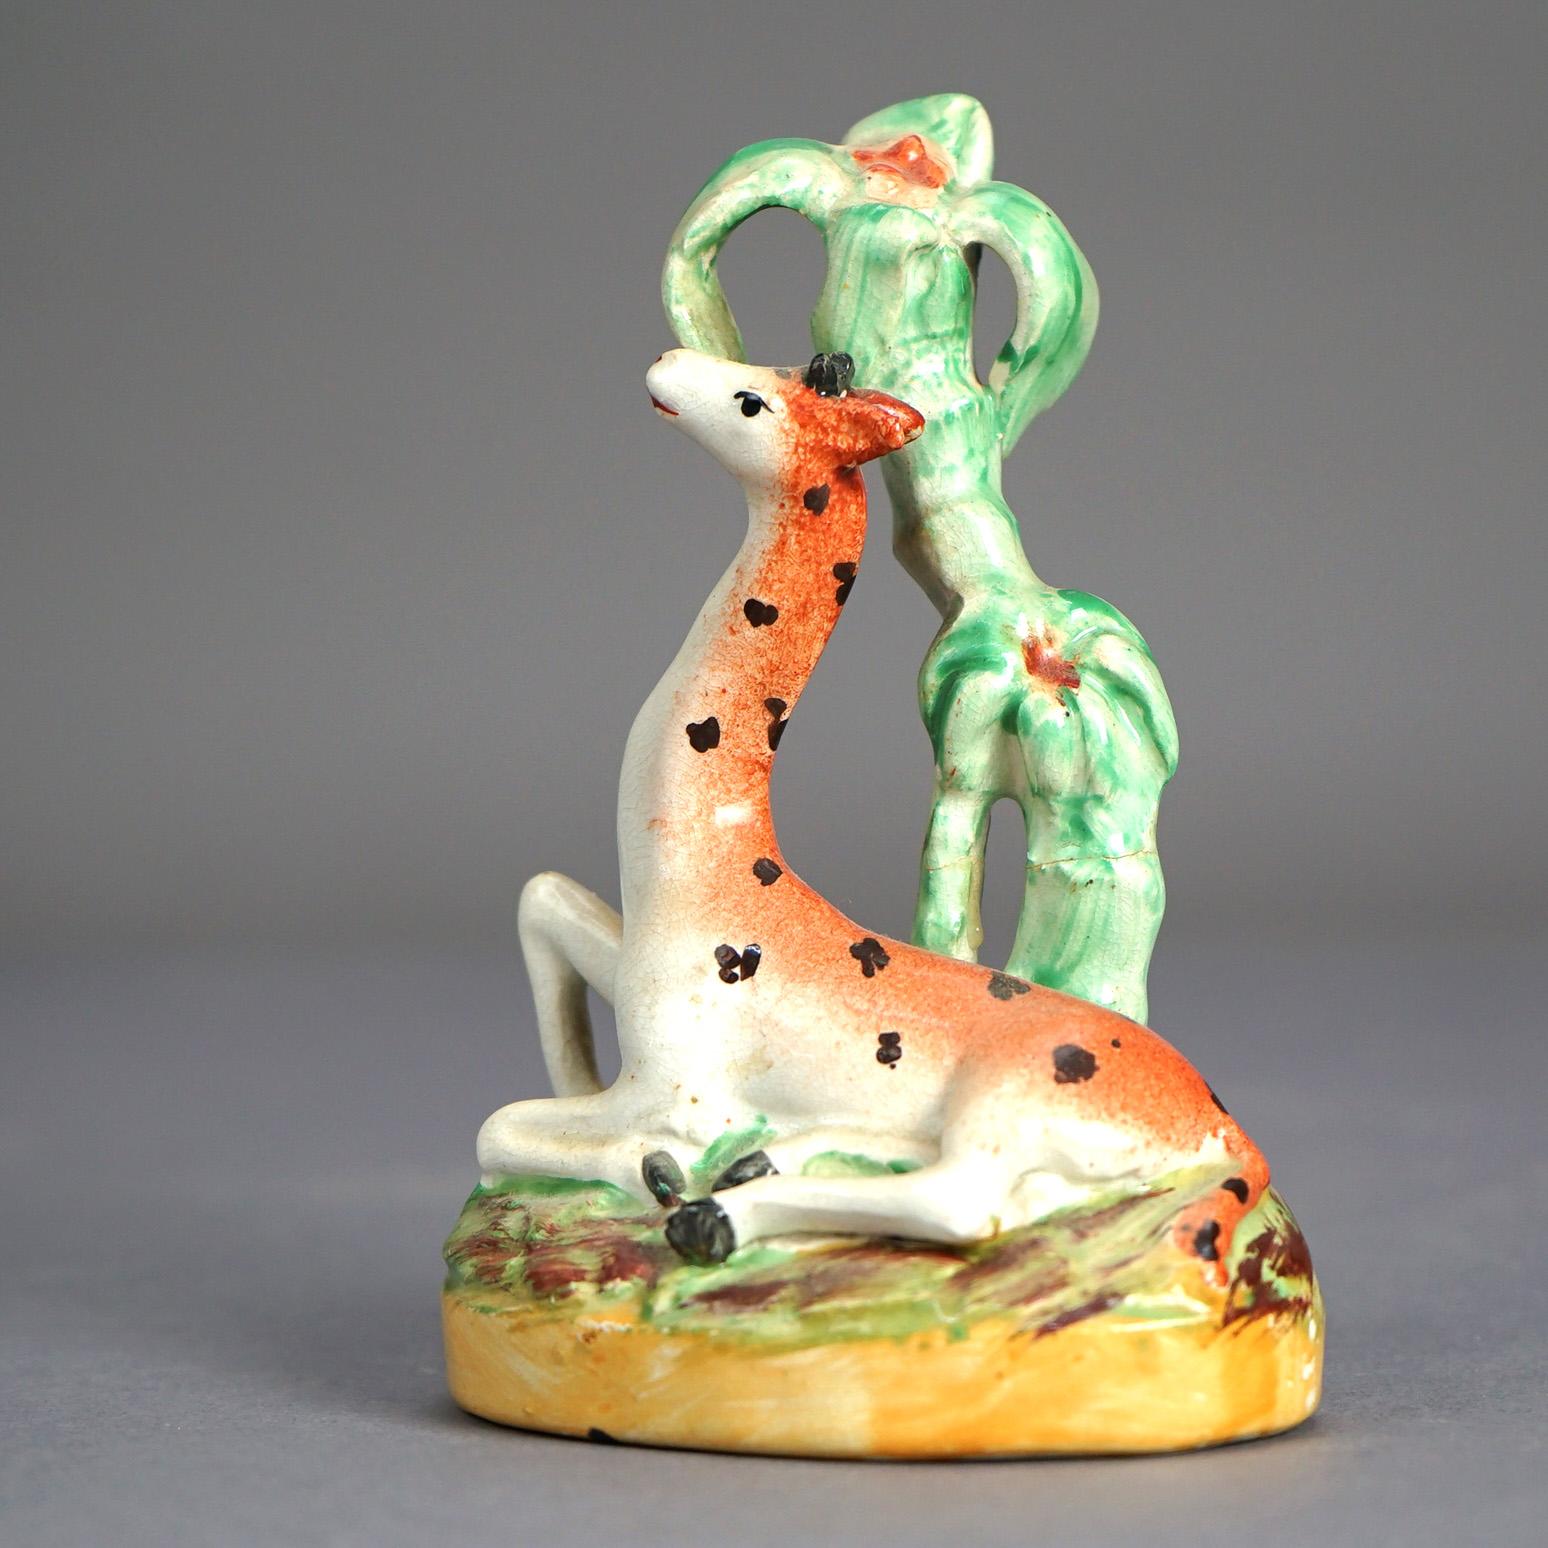 Antique Pair English Staffordshire Polychromed Porcelain Giraffe Figures C1870

Measures- 5.75''H x 4''W x 2.5''D